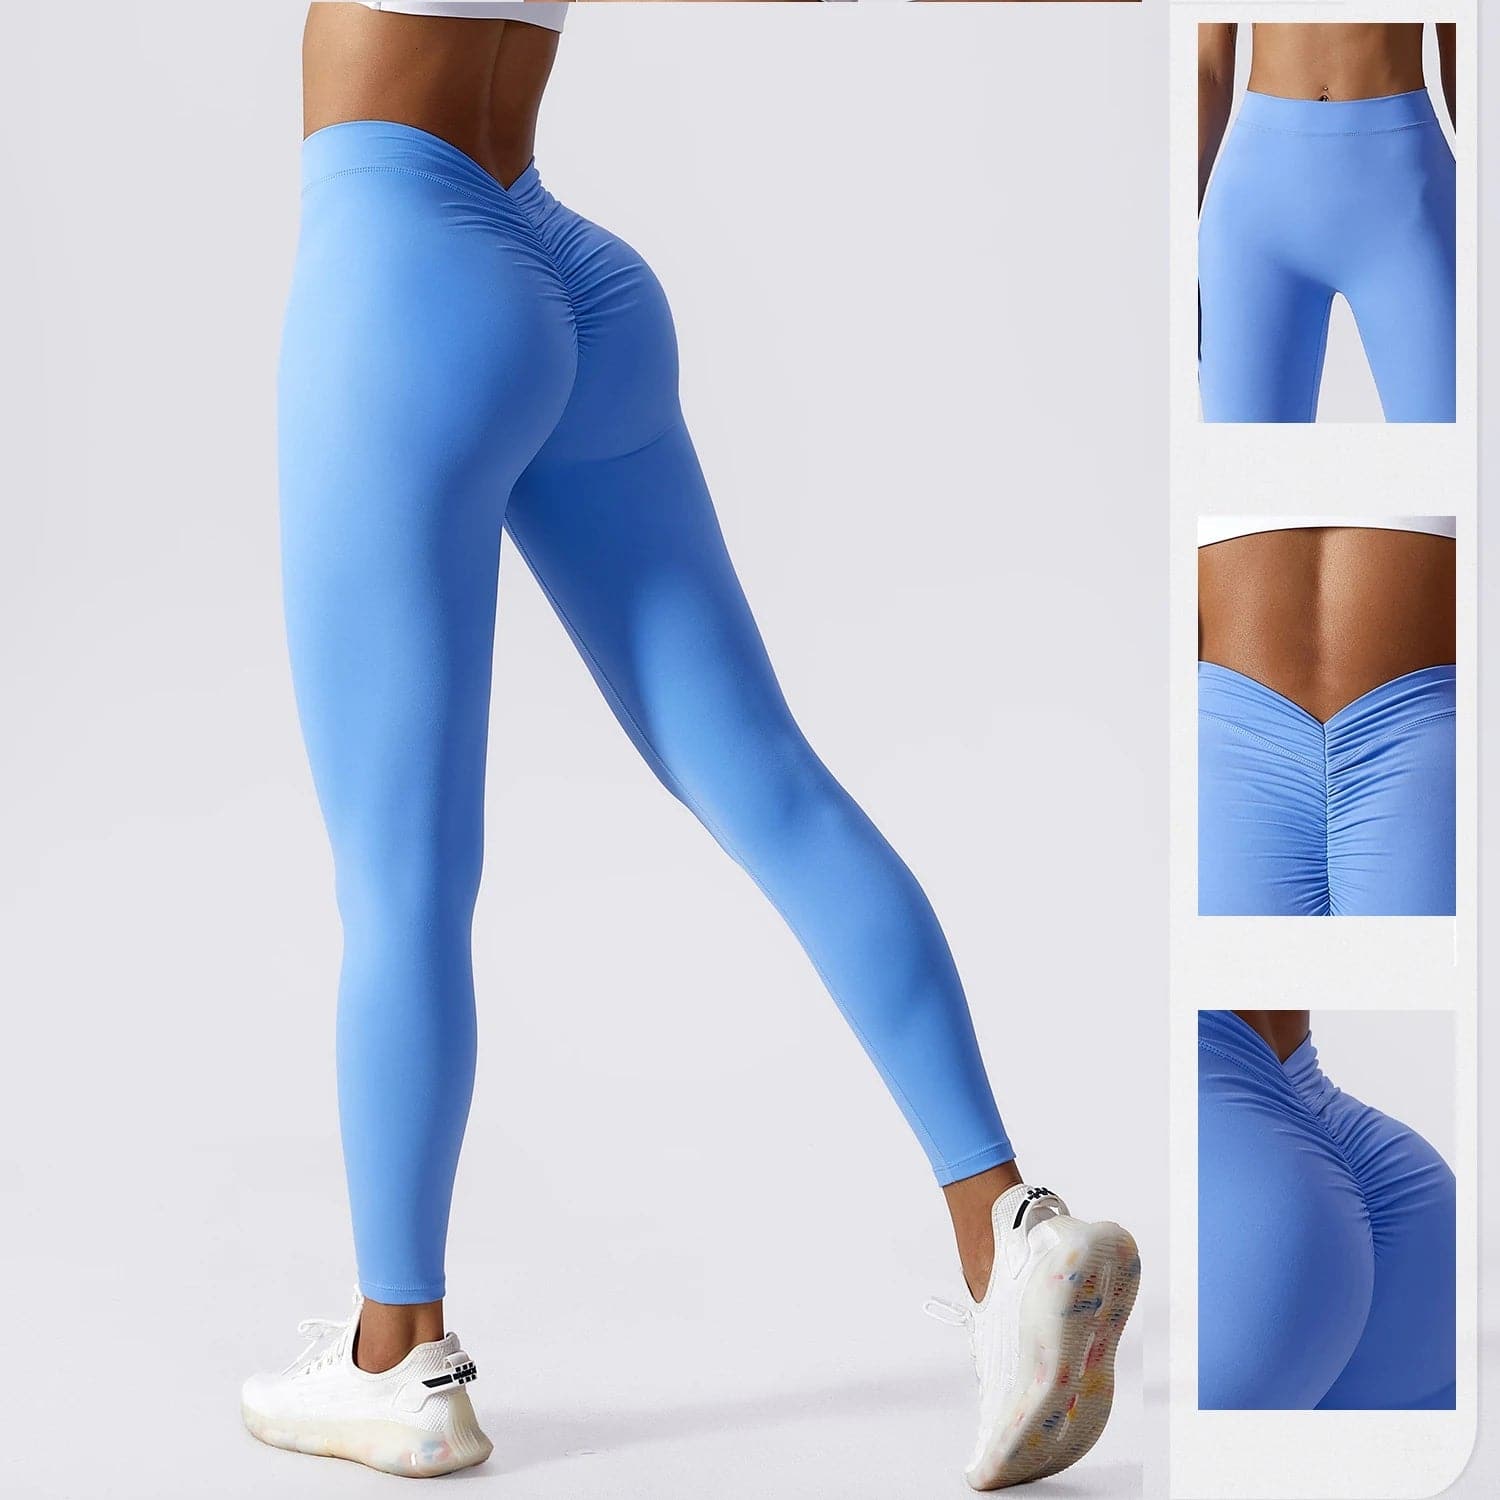 Yoga Fitness Leggings with Moisture-Wicking Nylon Fabric - Breathable & Flexible - Ankle-Length Pants - Hamidou Brand - Wandering Woman